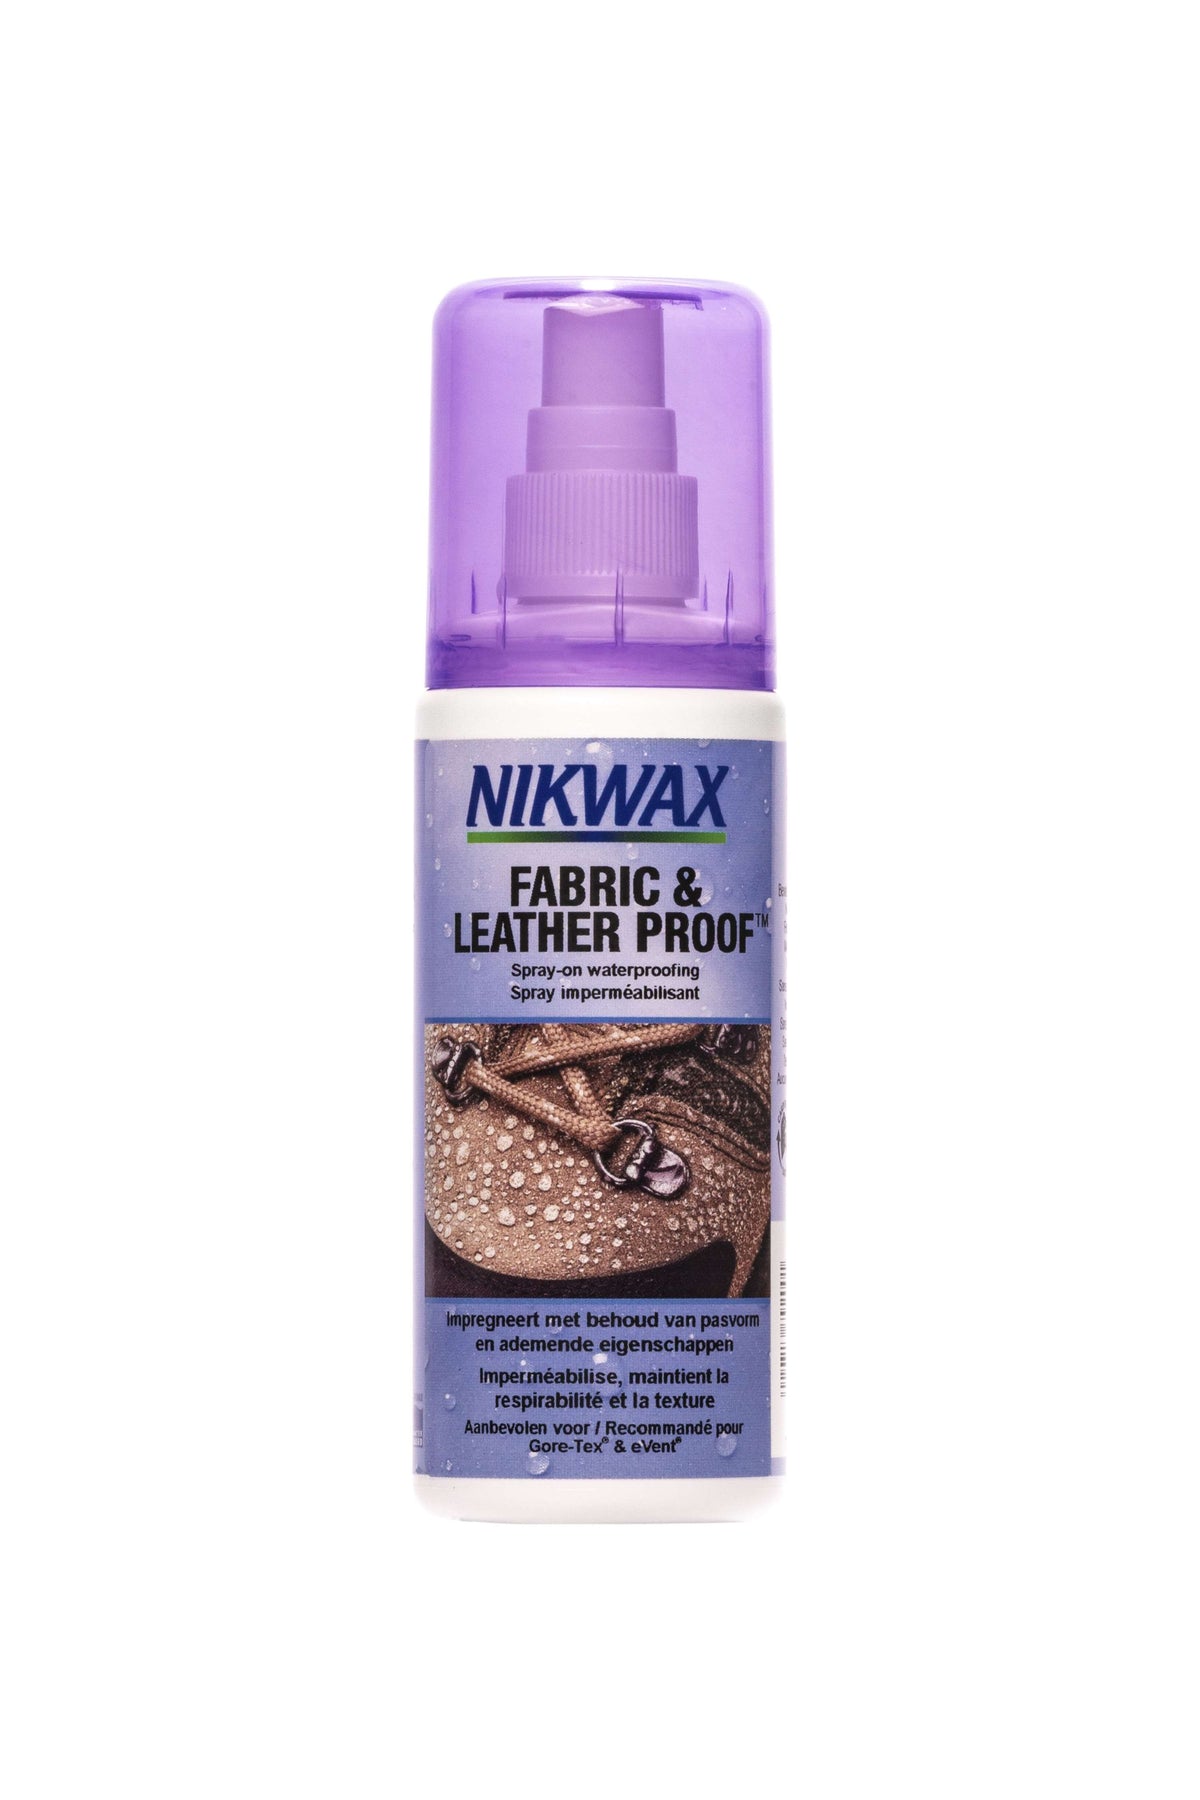 Nikwax Fabric & Leather Spray